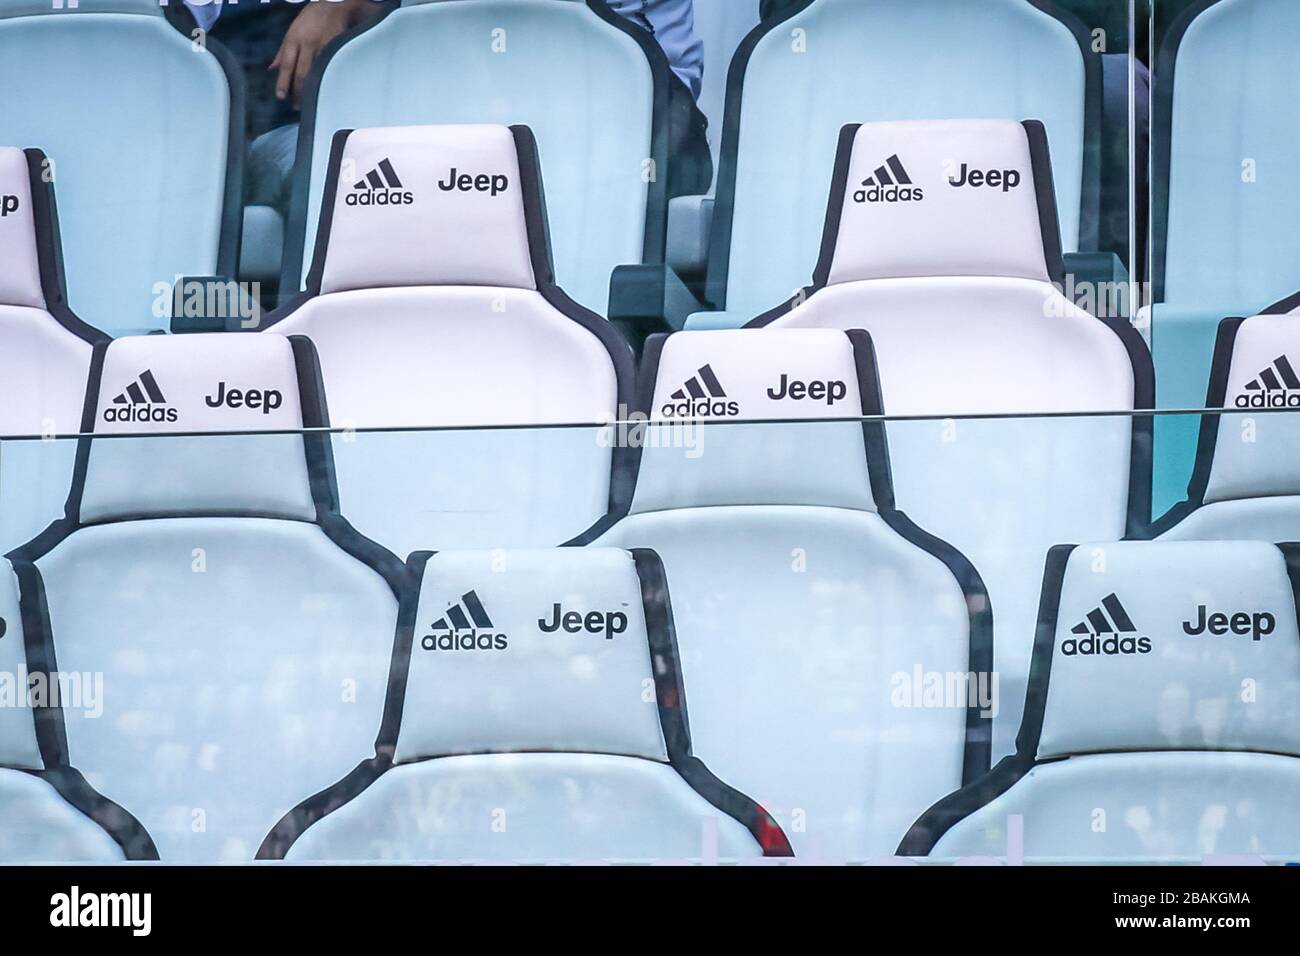 Juventus bench during soccer season 2019/20 symbolic images - Photo credit Fabrizio Carabelli /LM/ Stock Photo